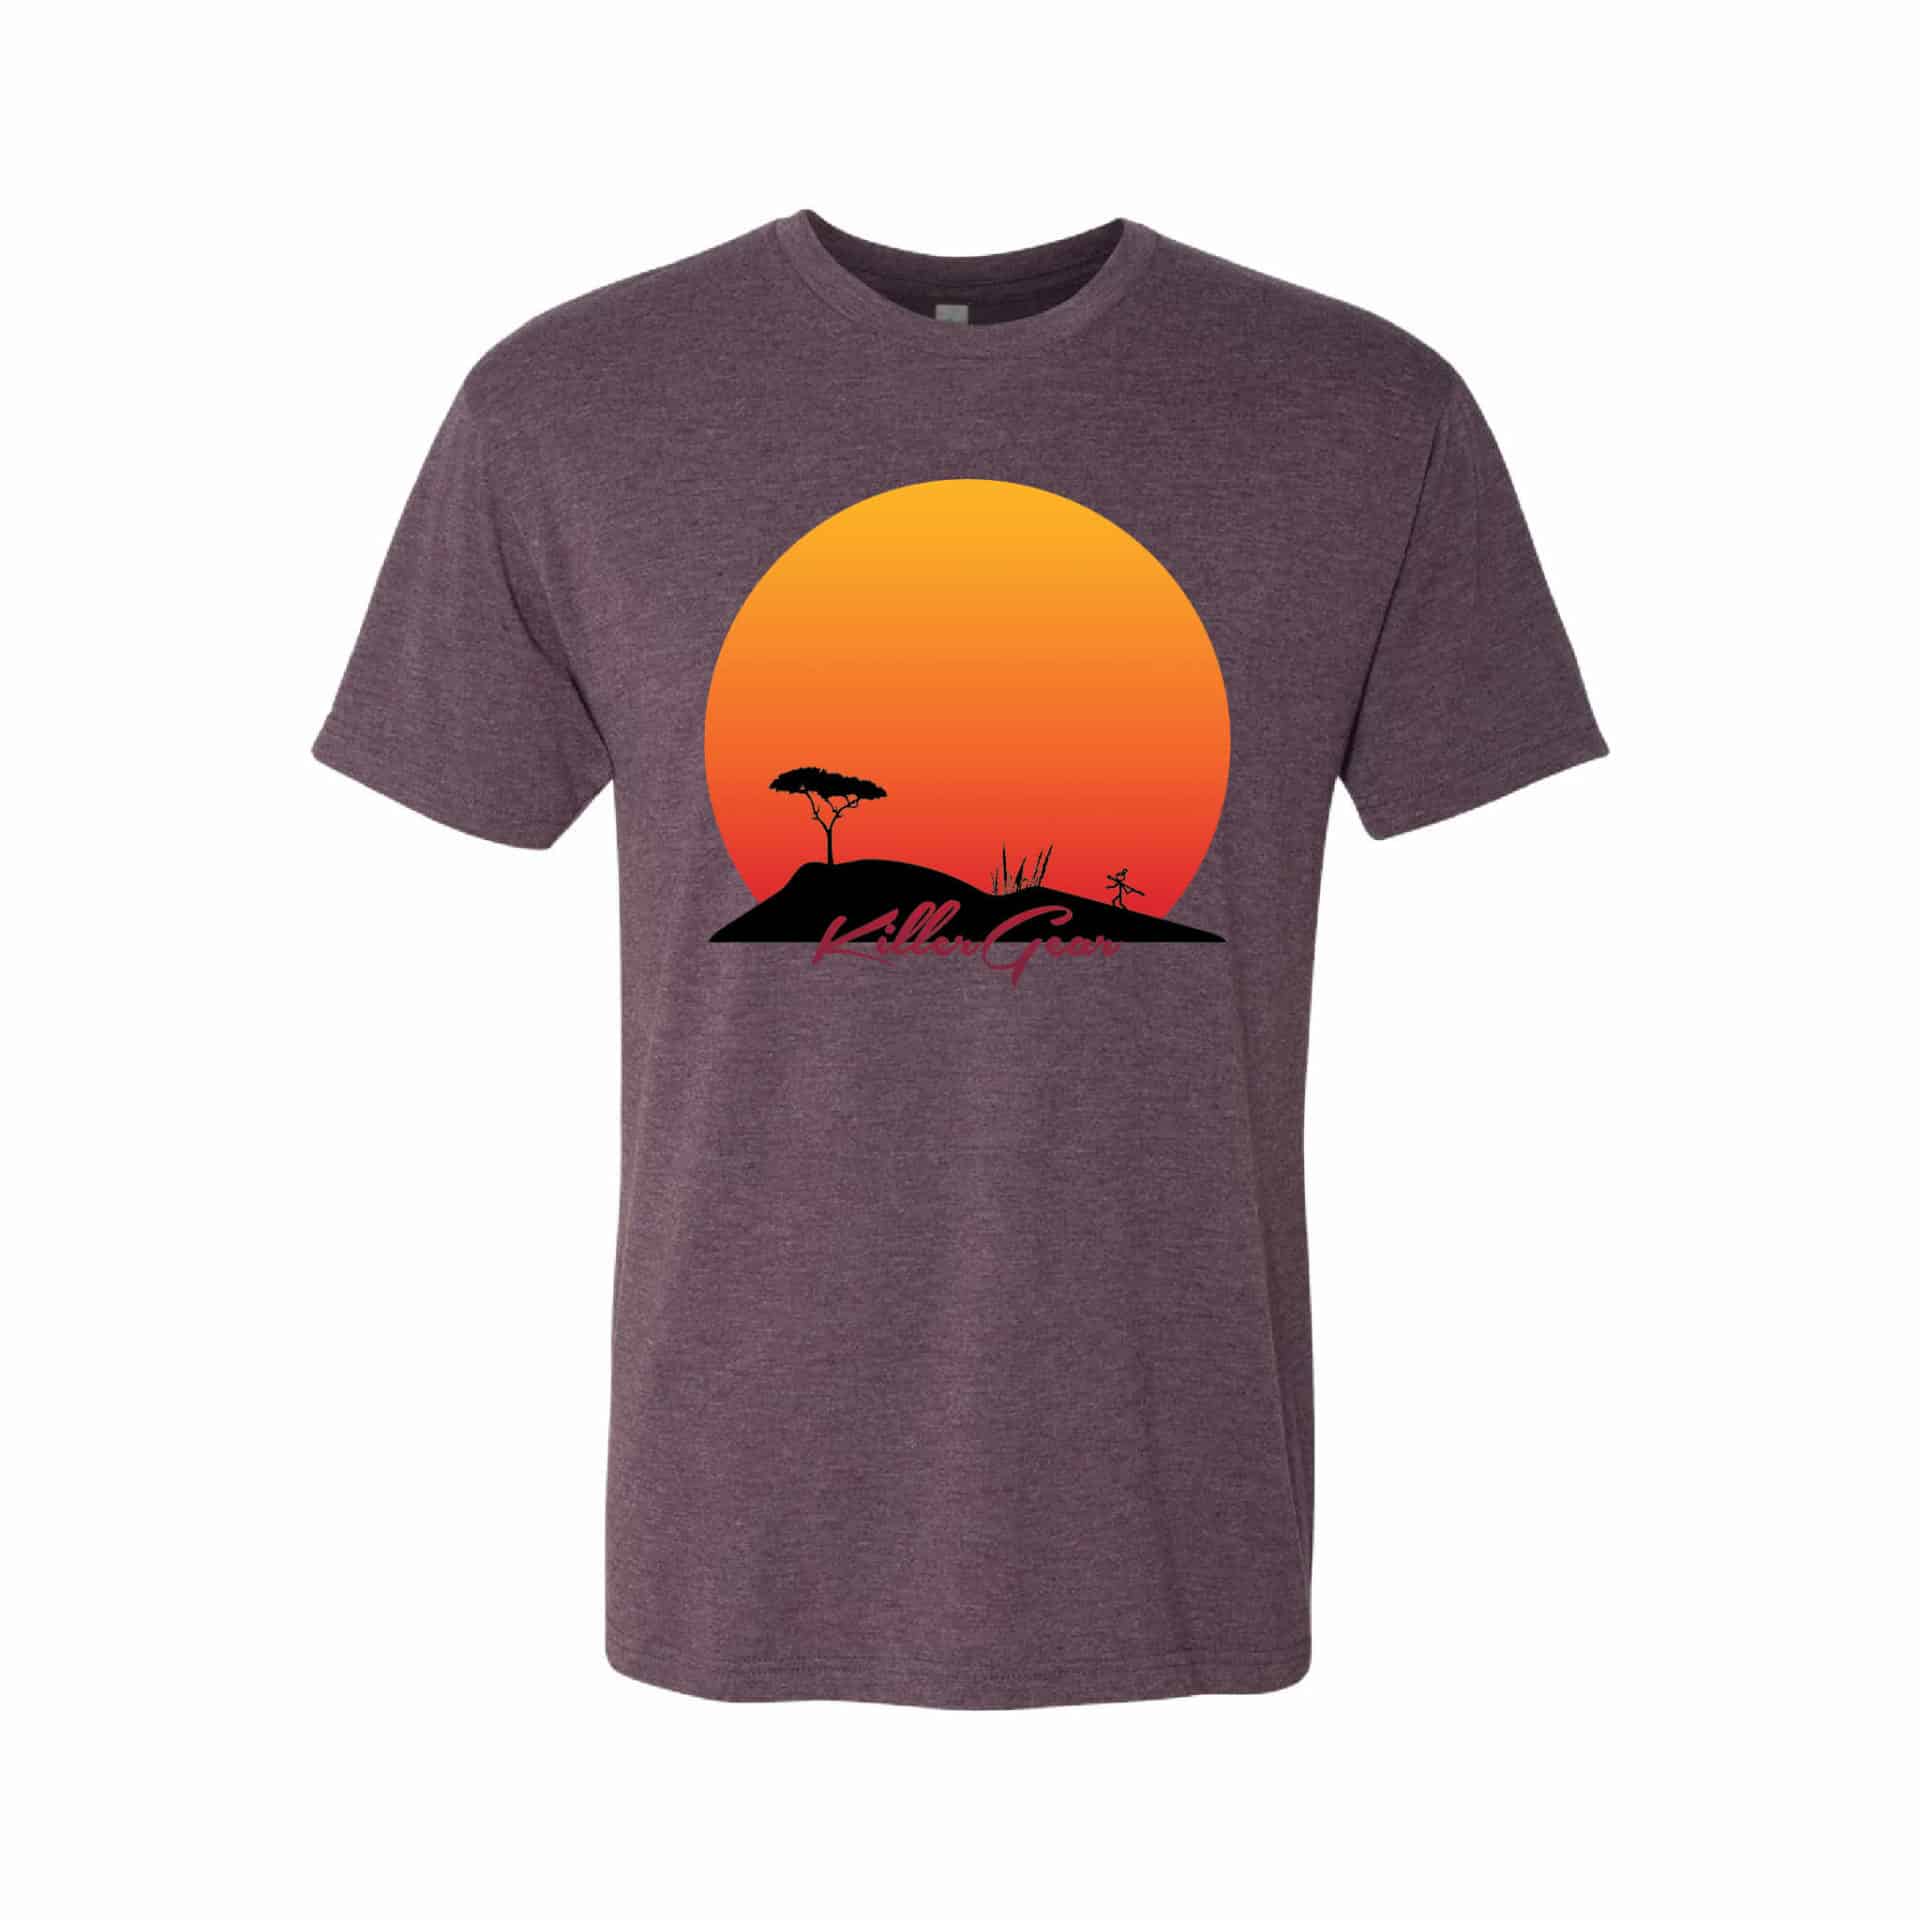 Super Soft Purple T-Shirt with KillerGear African Sunset Design ...